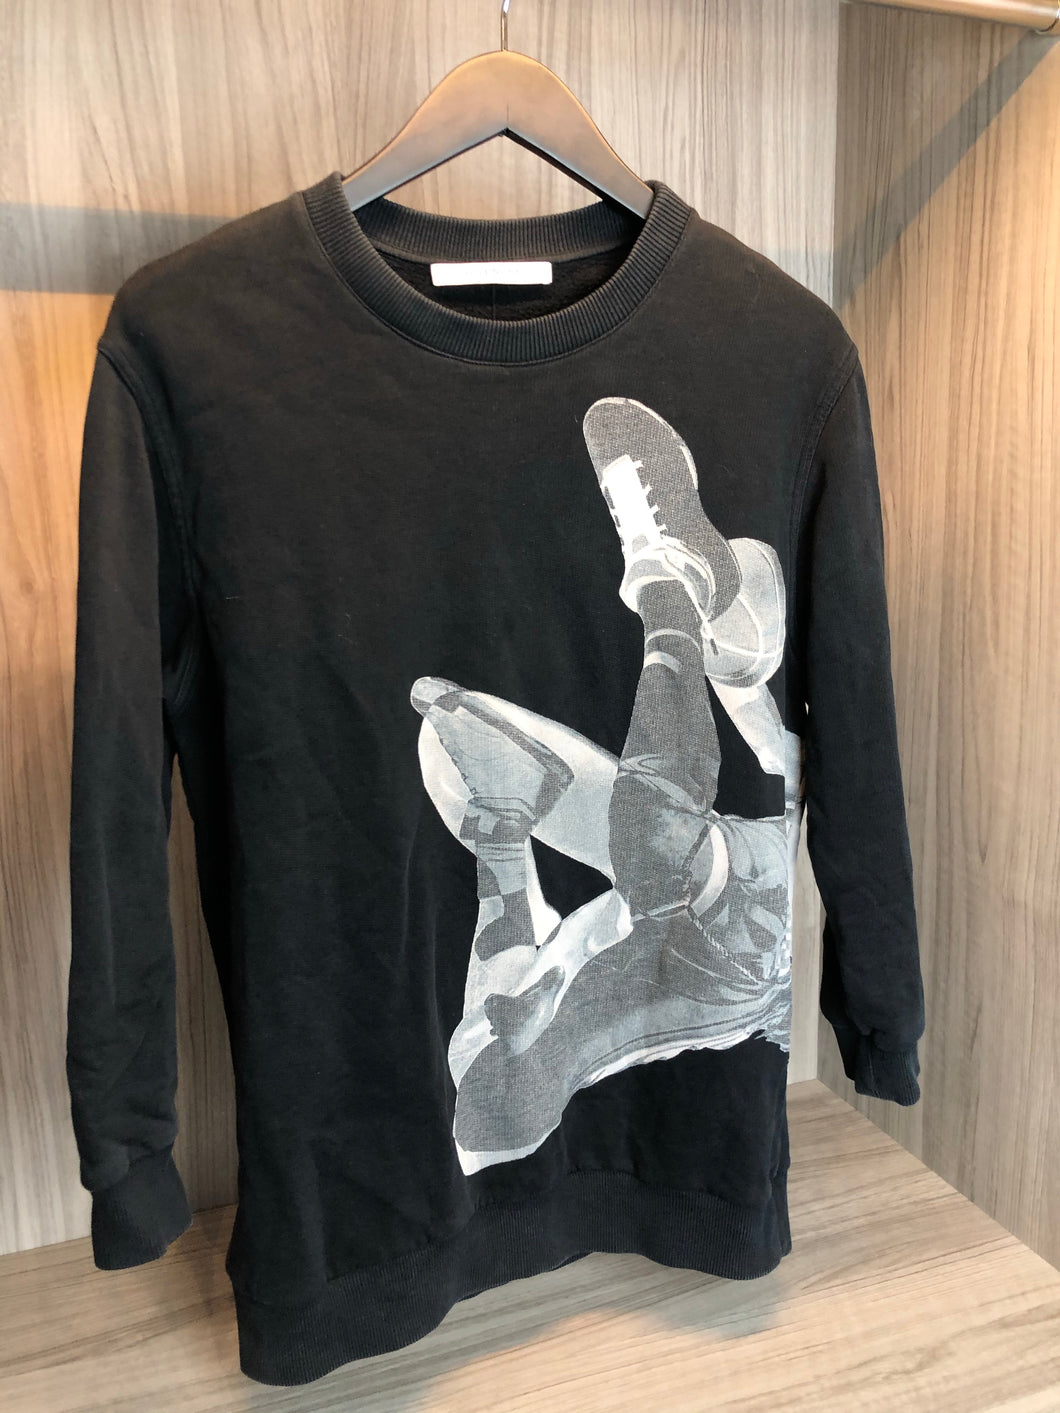 Givenchy basketball sweater sz XS